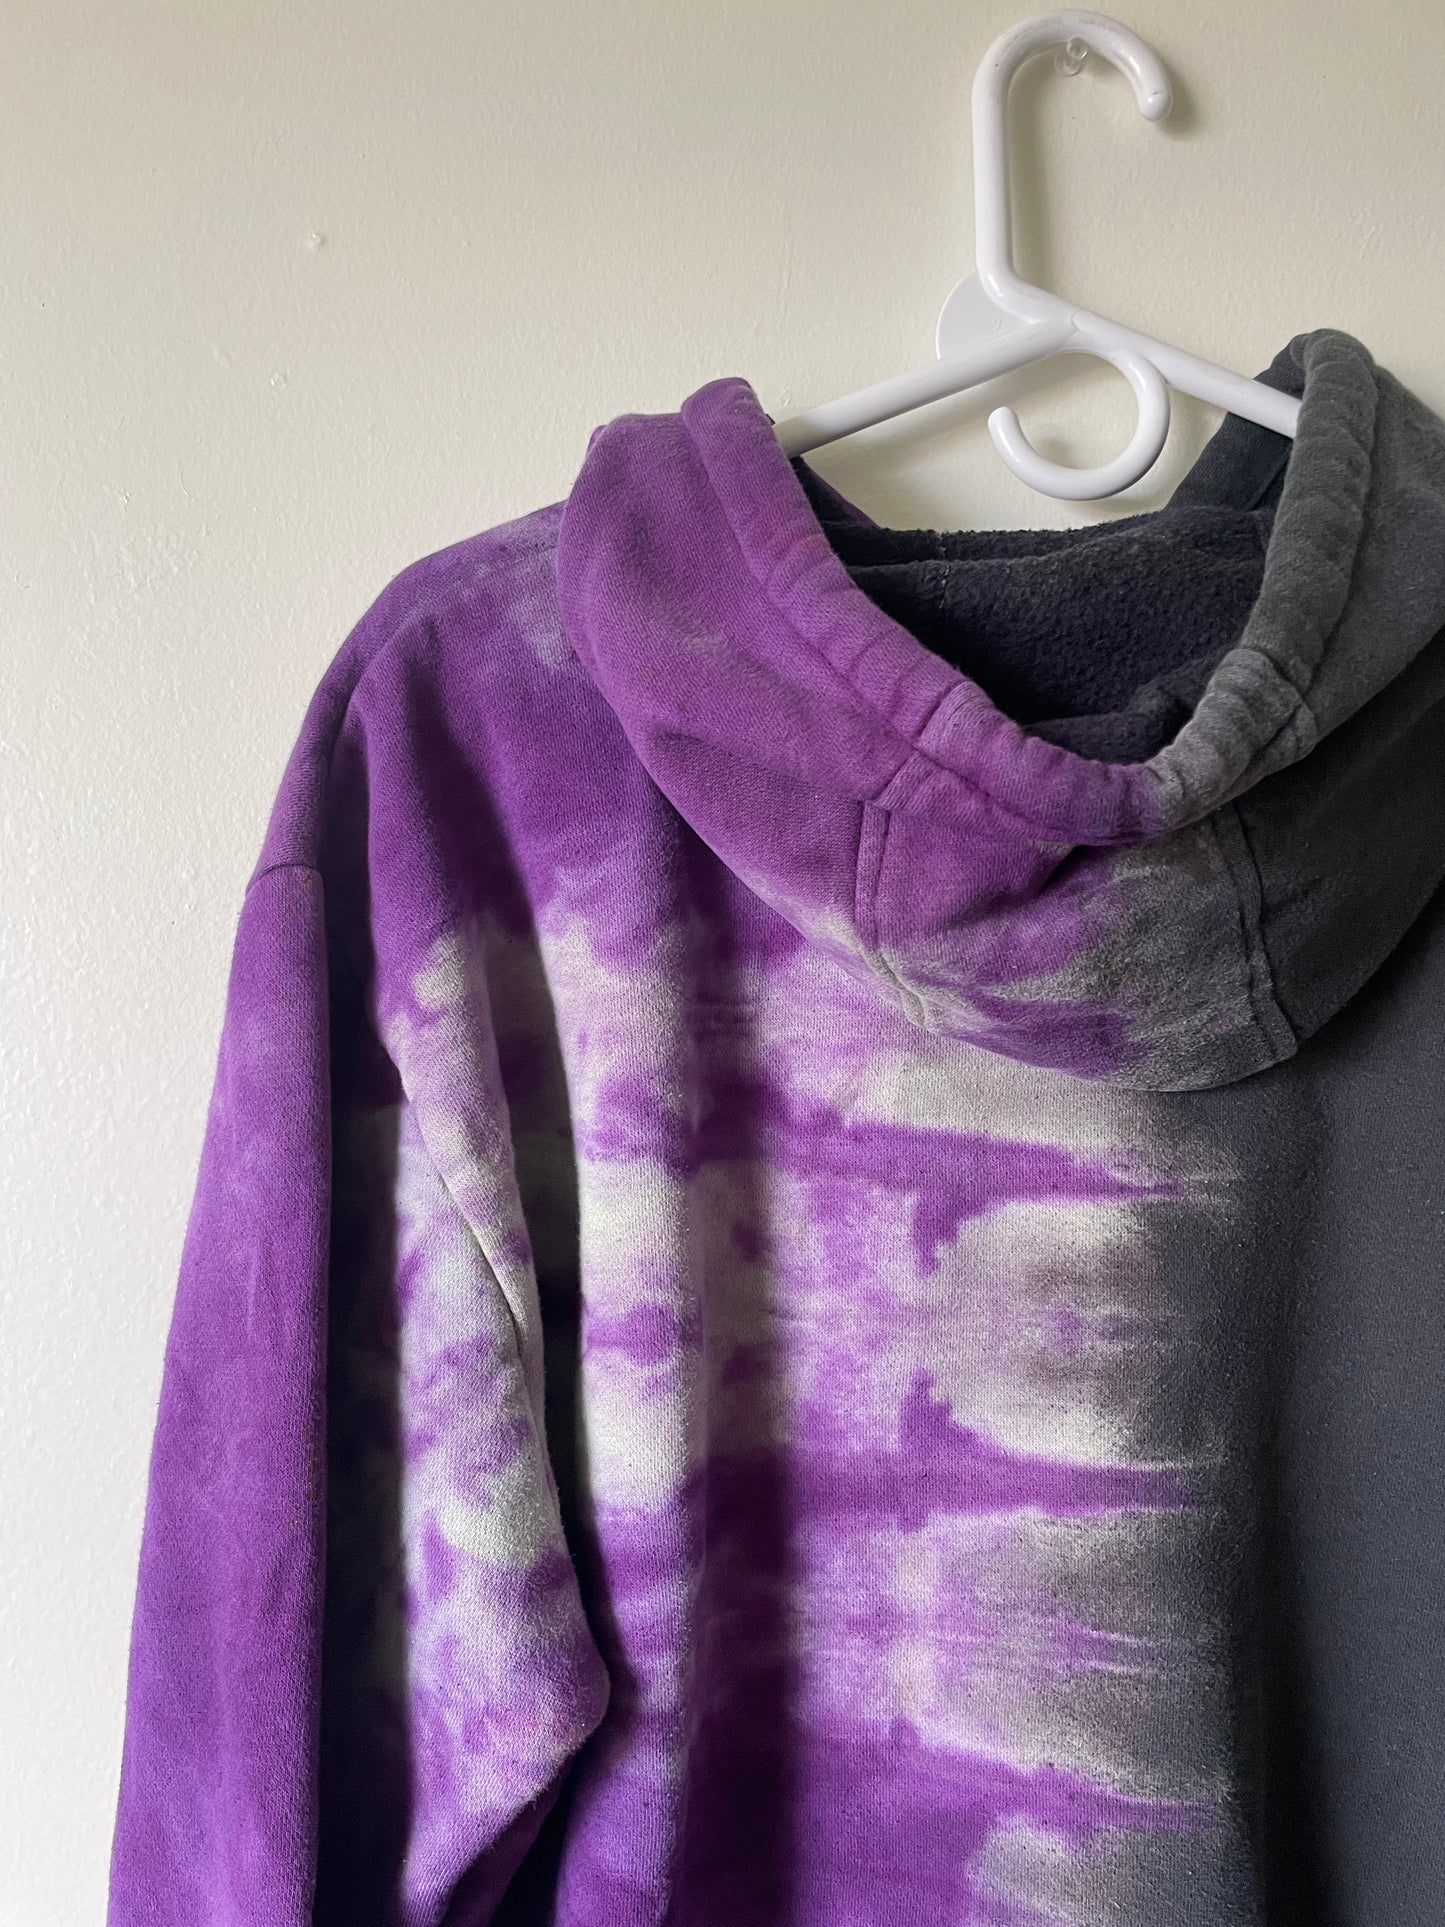 XL Men's Nike SB Reverse Tie Dye Hoodie | One-Of-a-Kind Upcycled Black and Purple Half-and-Half Sweatshirt